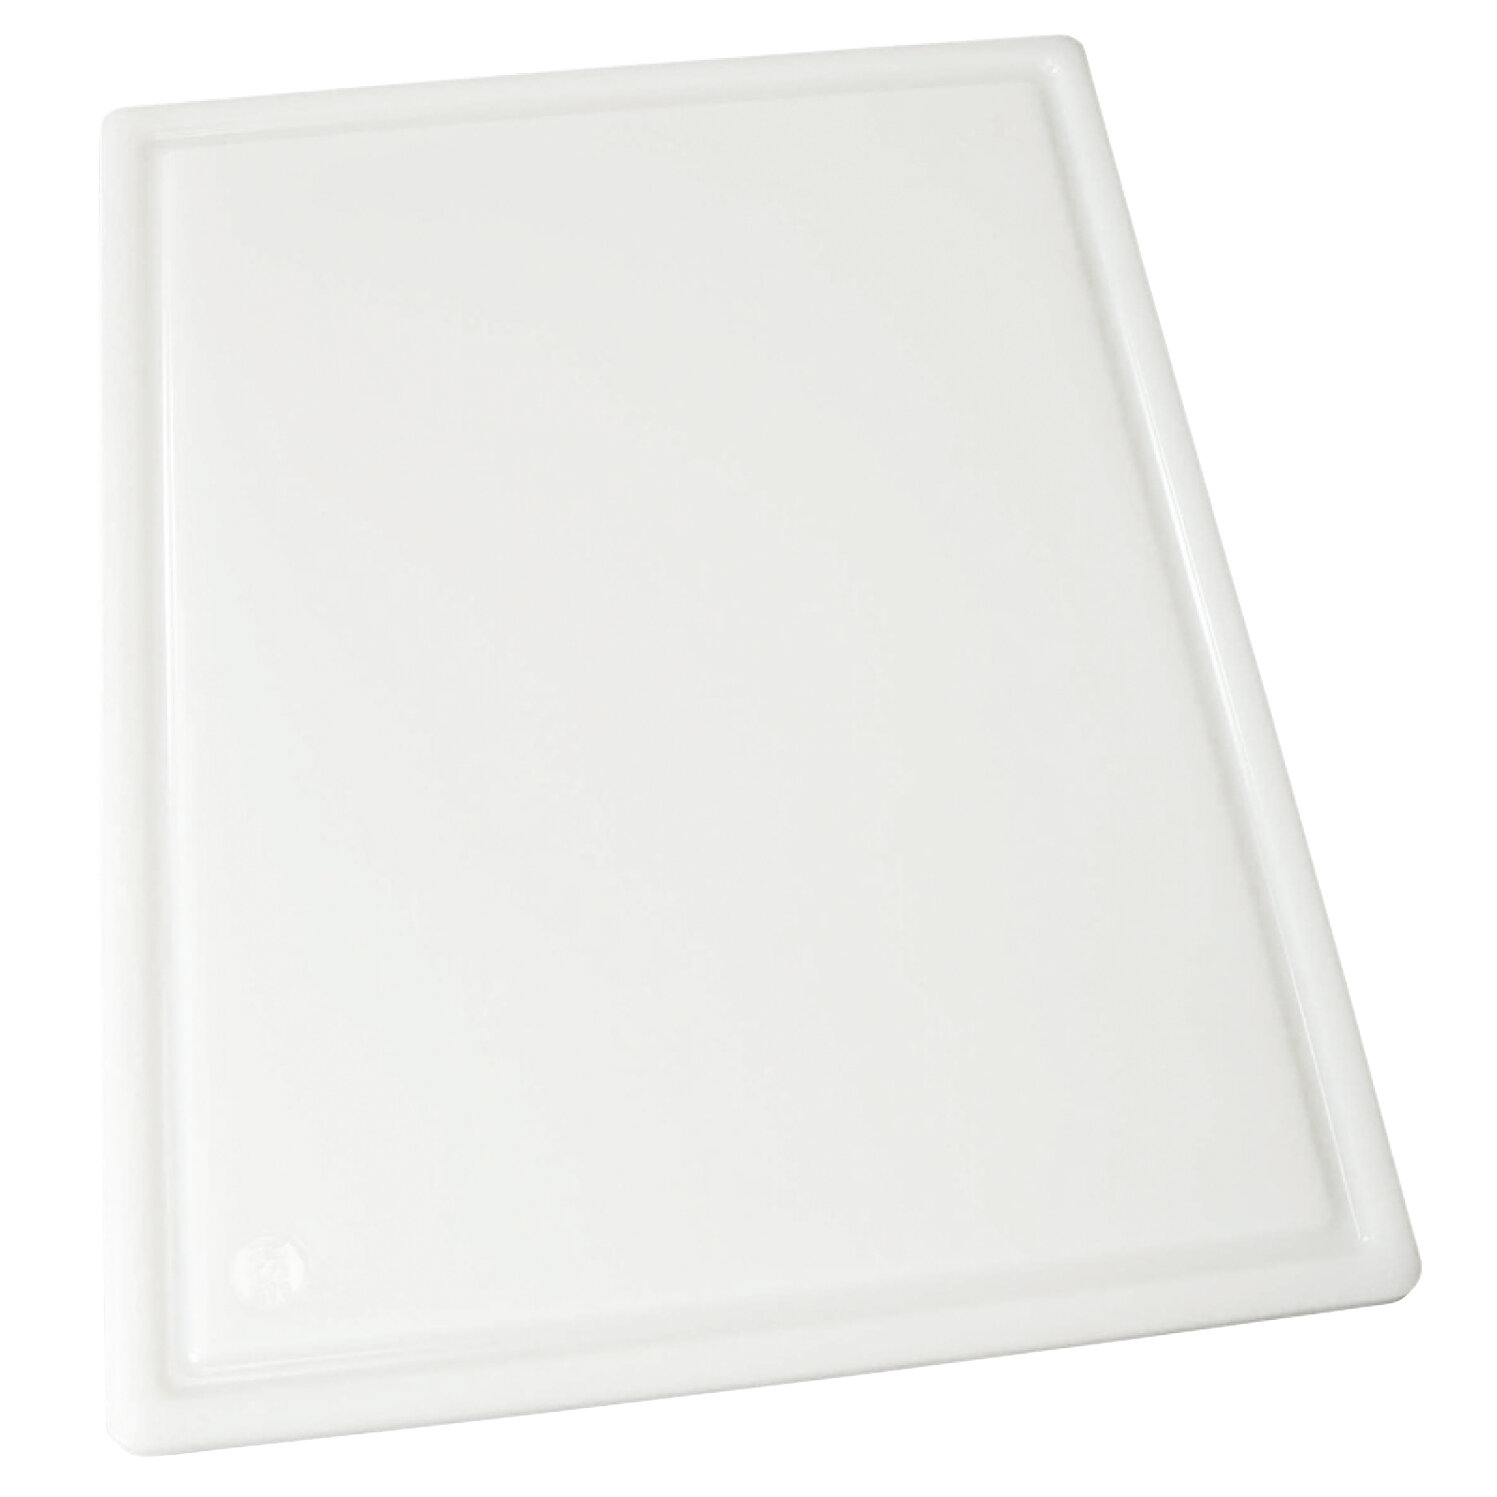 Winco CBI-1824 Grooved Cutting Board, White